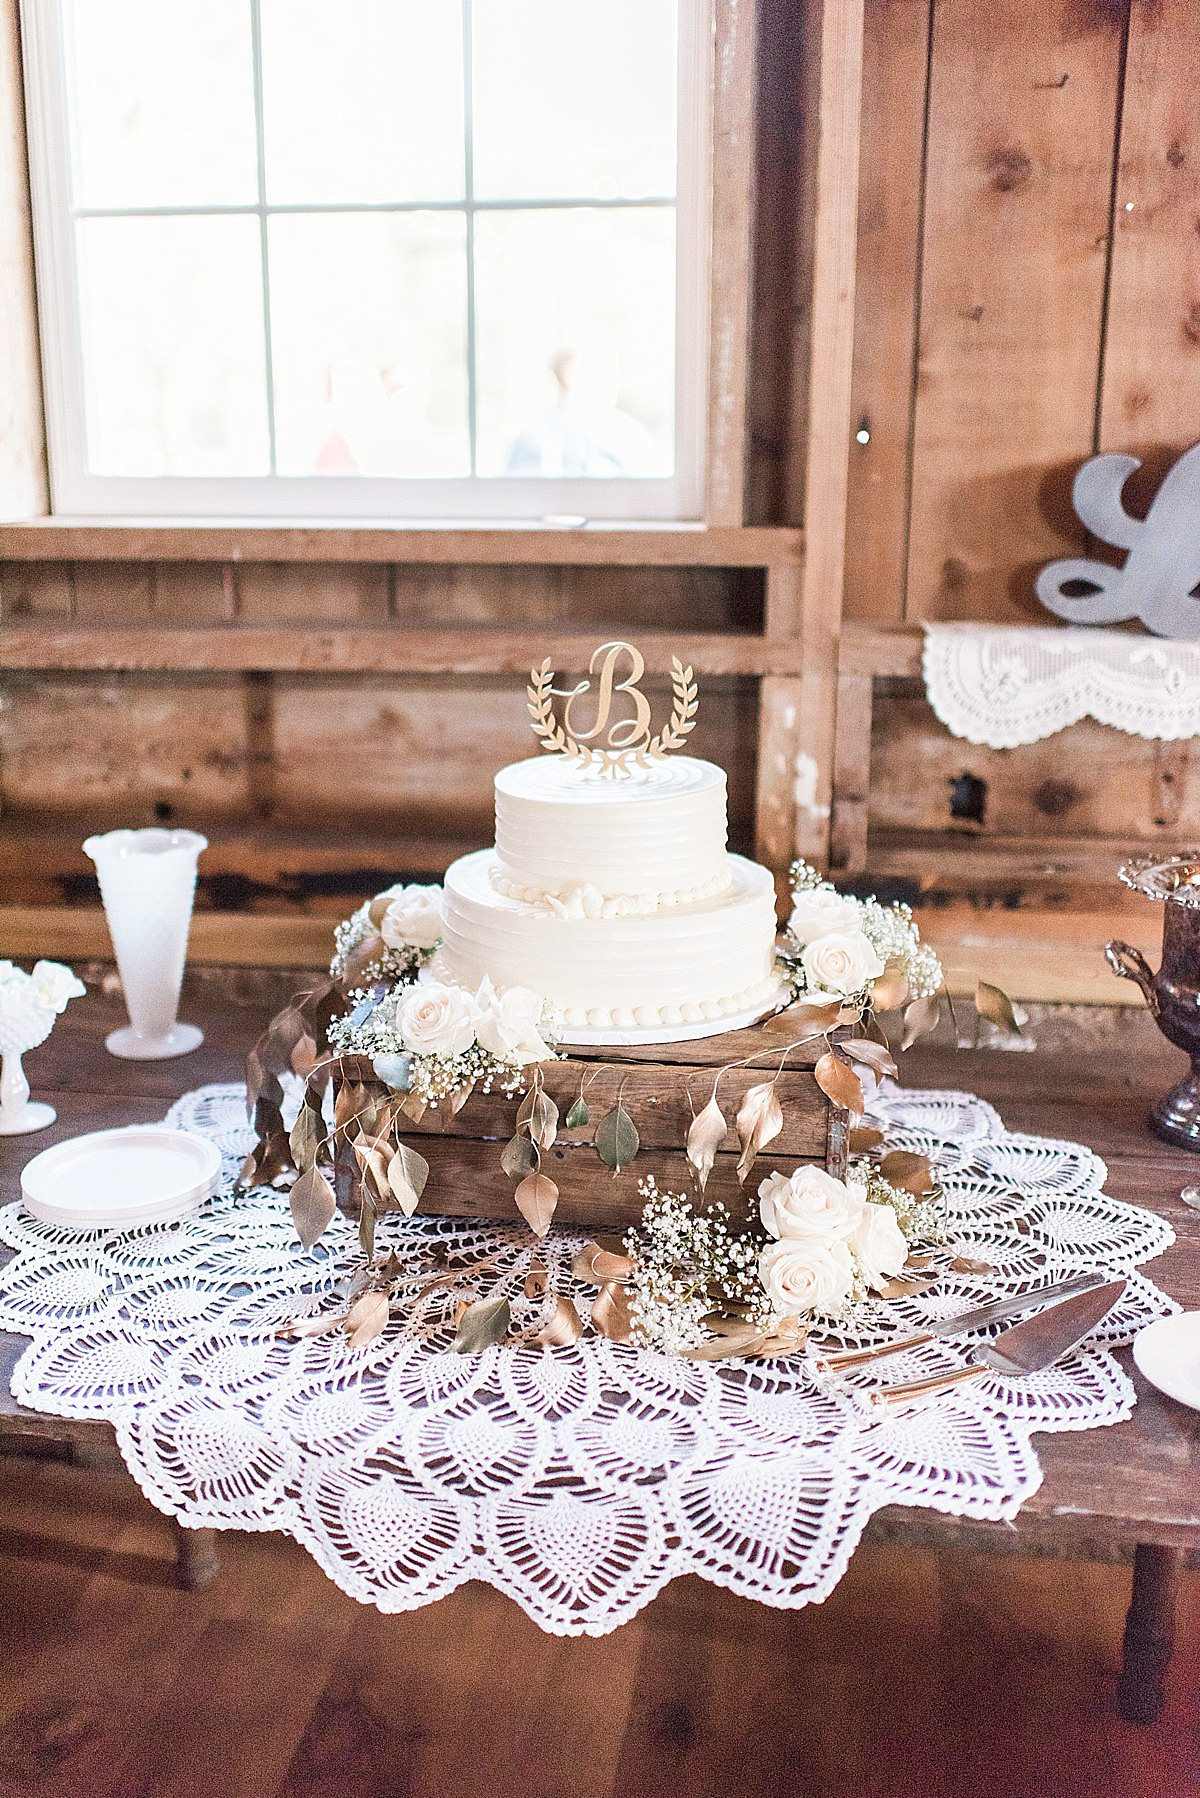 Wedding Cake by Carl's Cake Madison, WI